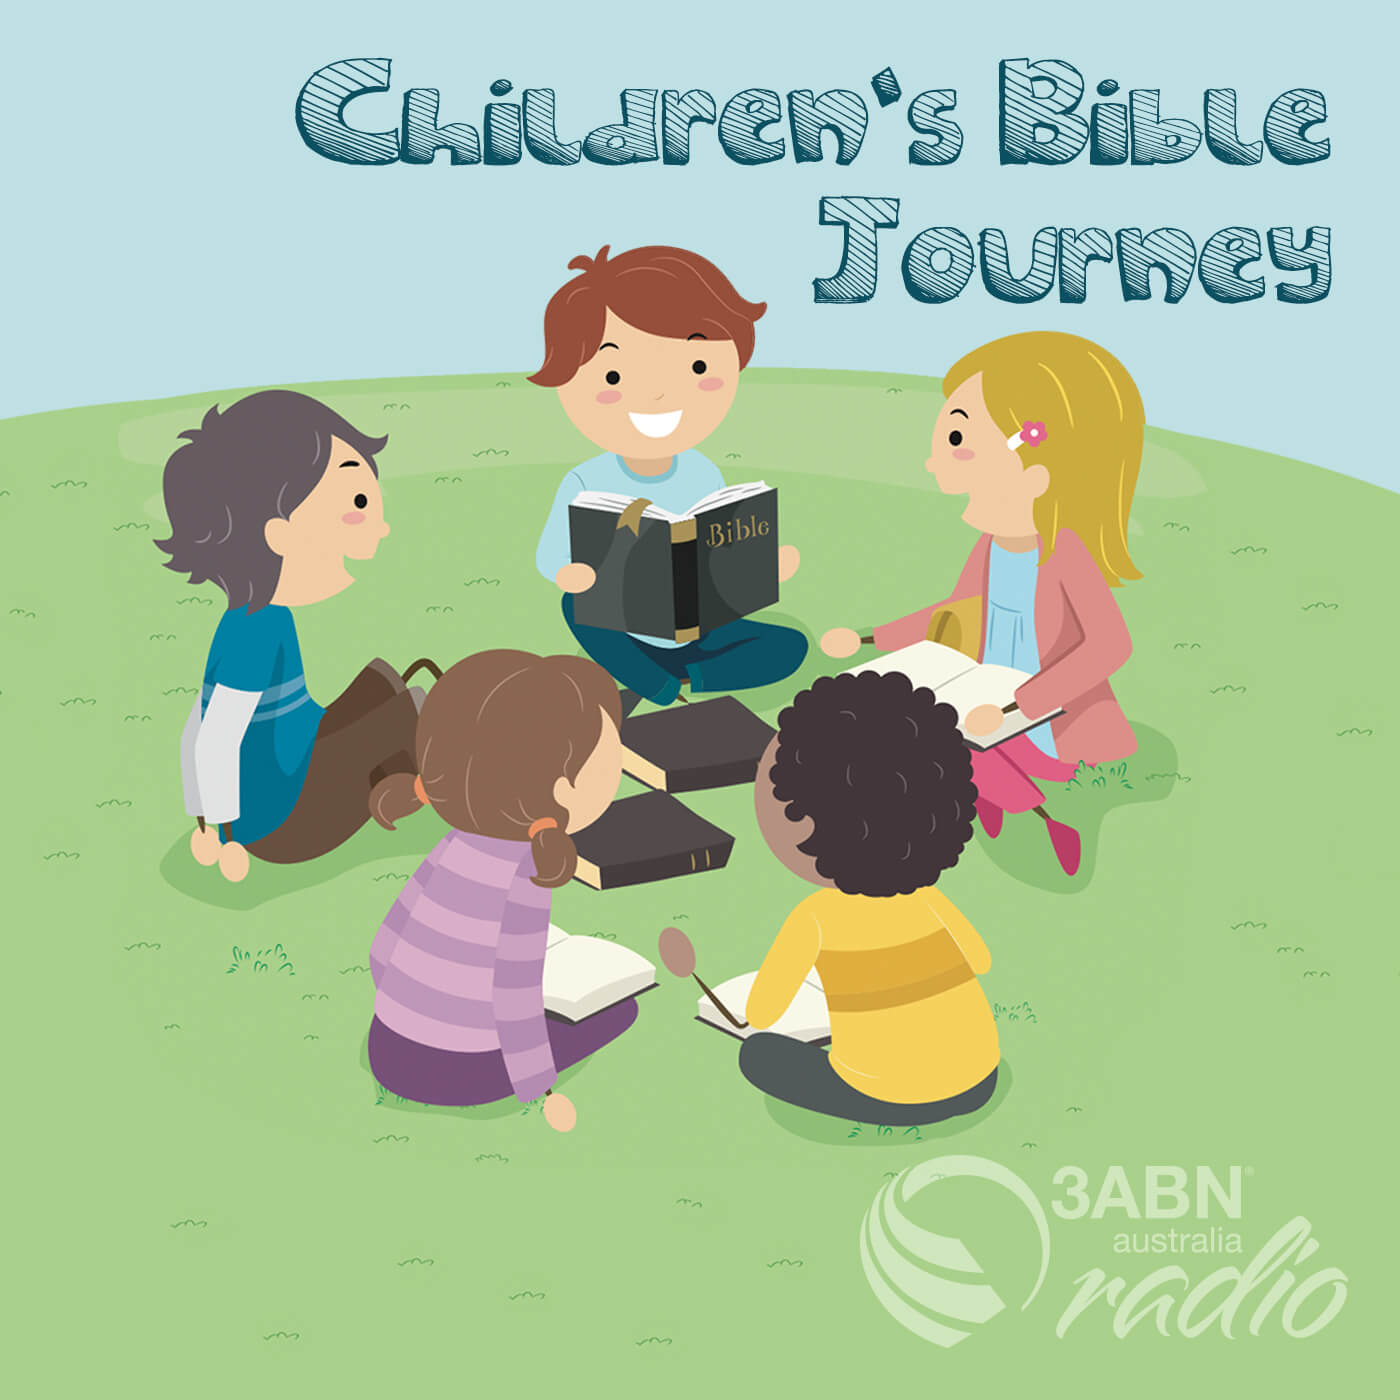 Children's Bible Journey - 2170